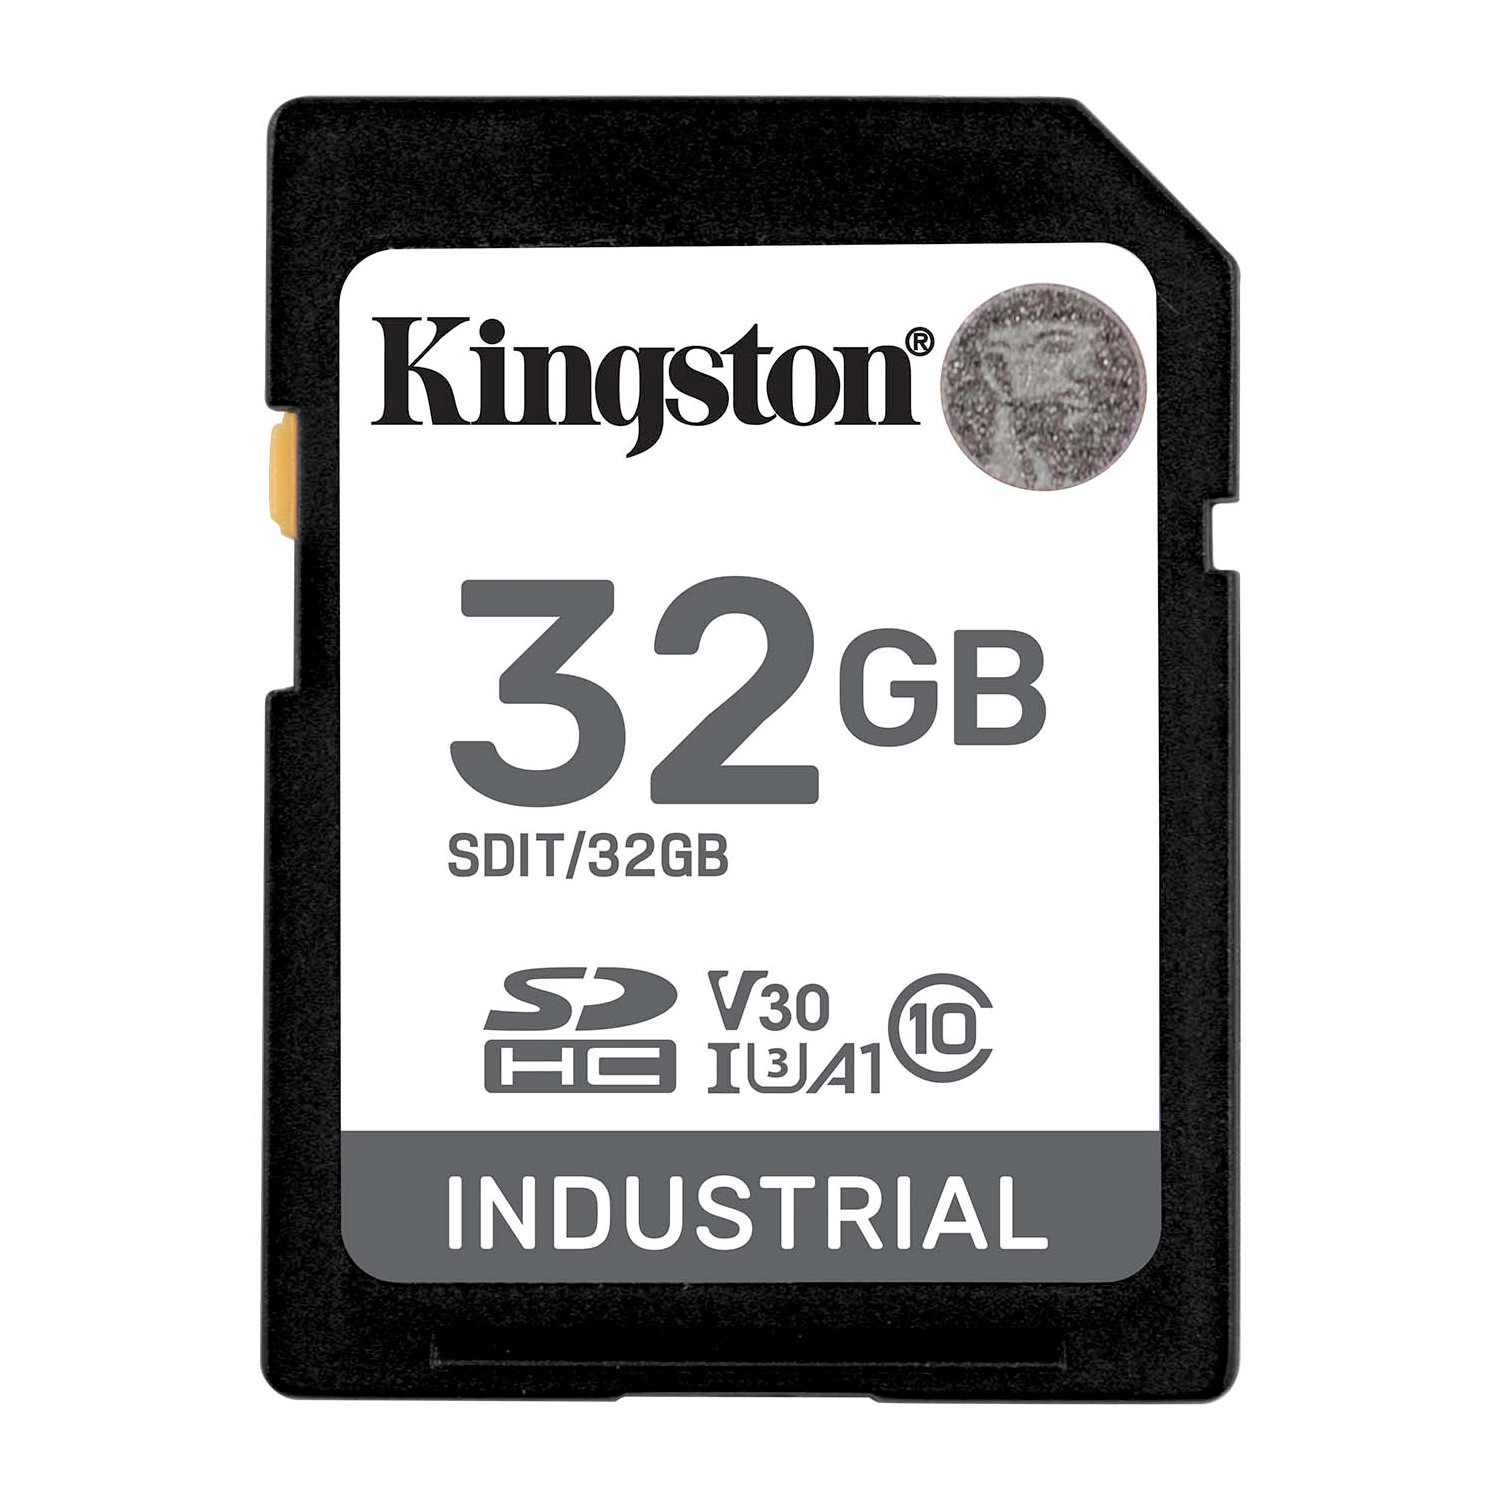 Kingston - SDIT-32GB -   